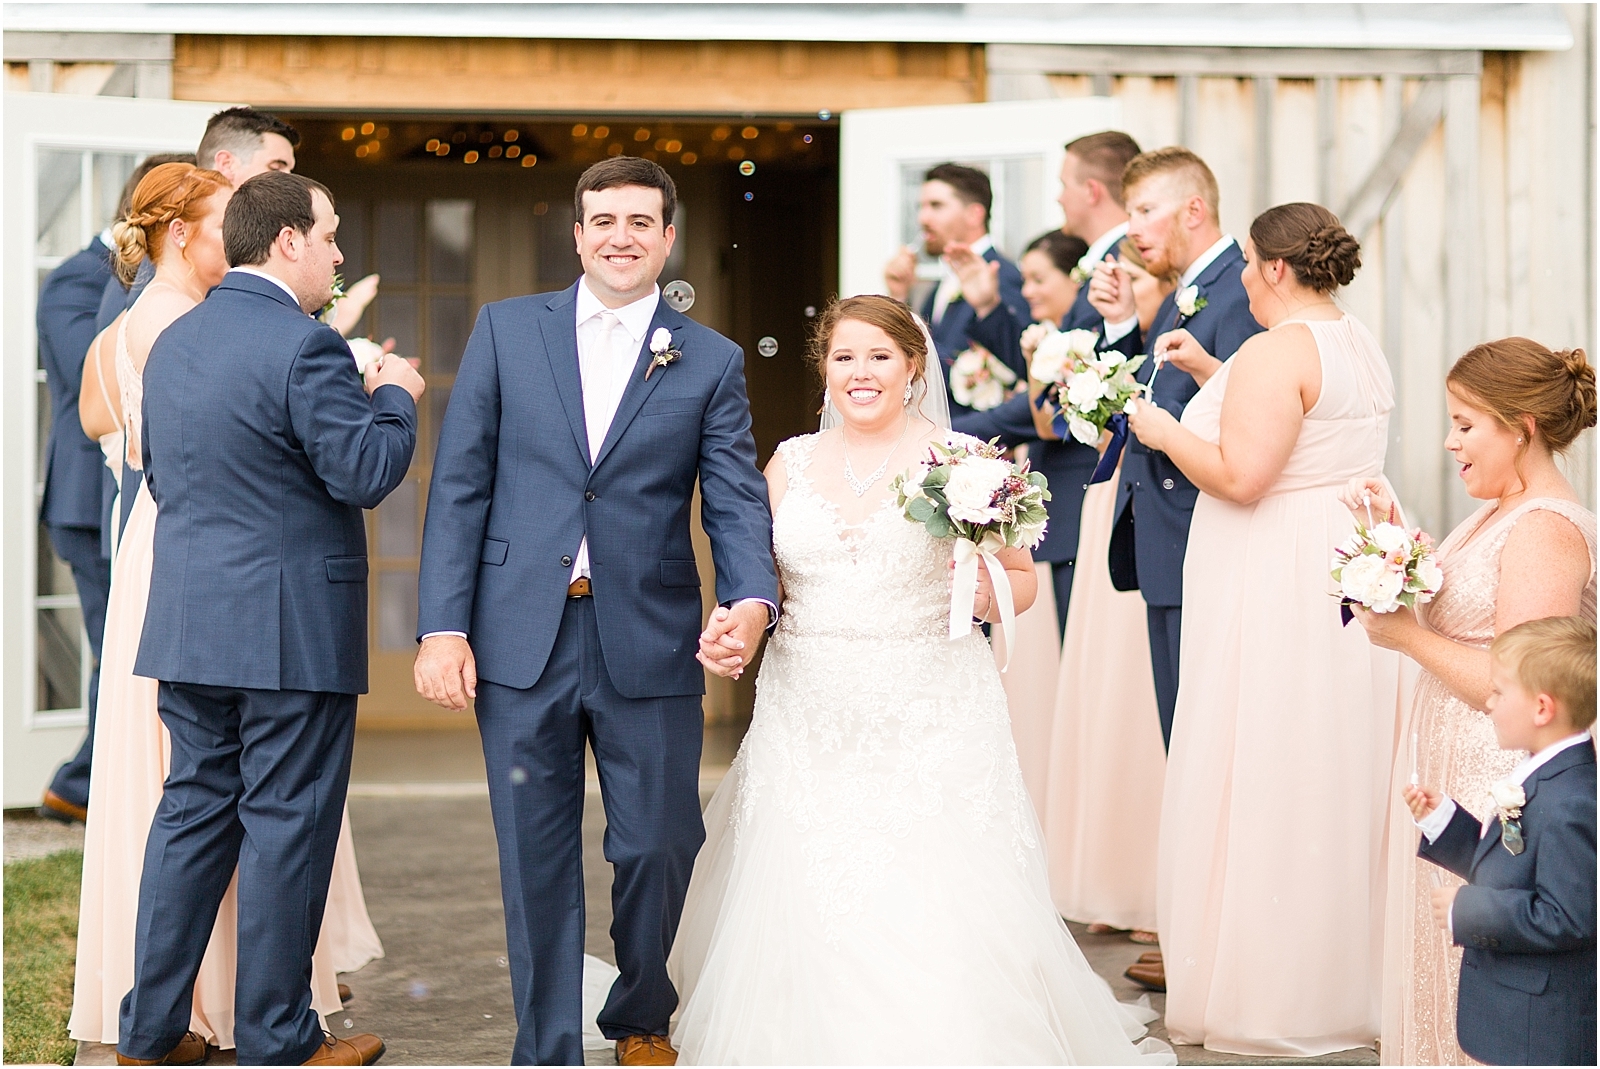 Rachel and Michael | Bret and Brandie Photography | Evansville Wedding Photographers 0068.jpg